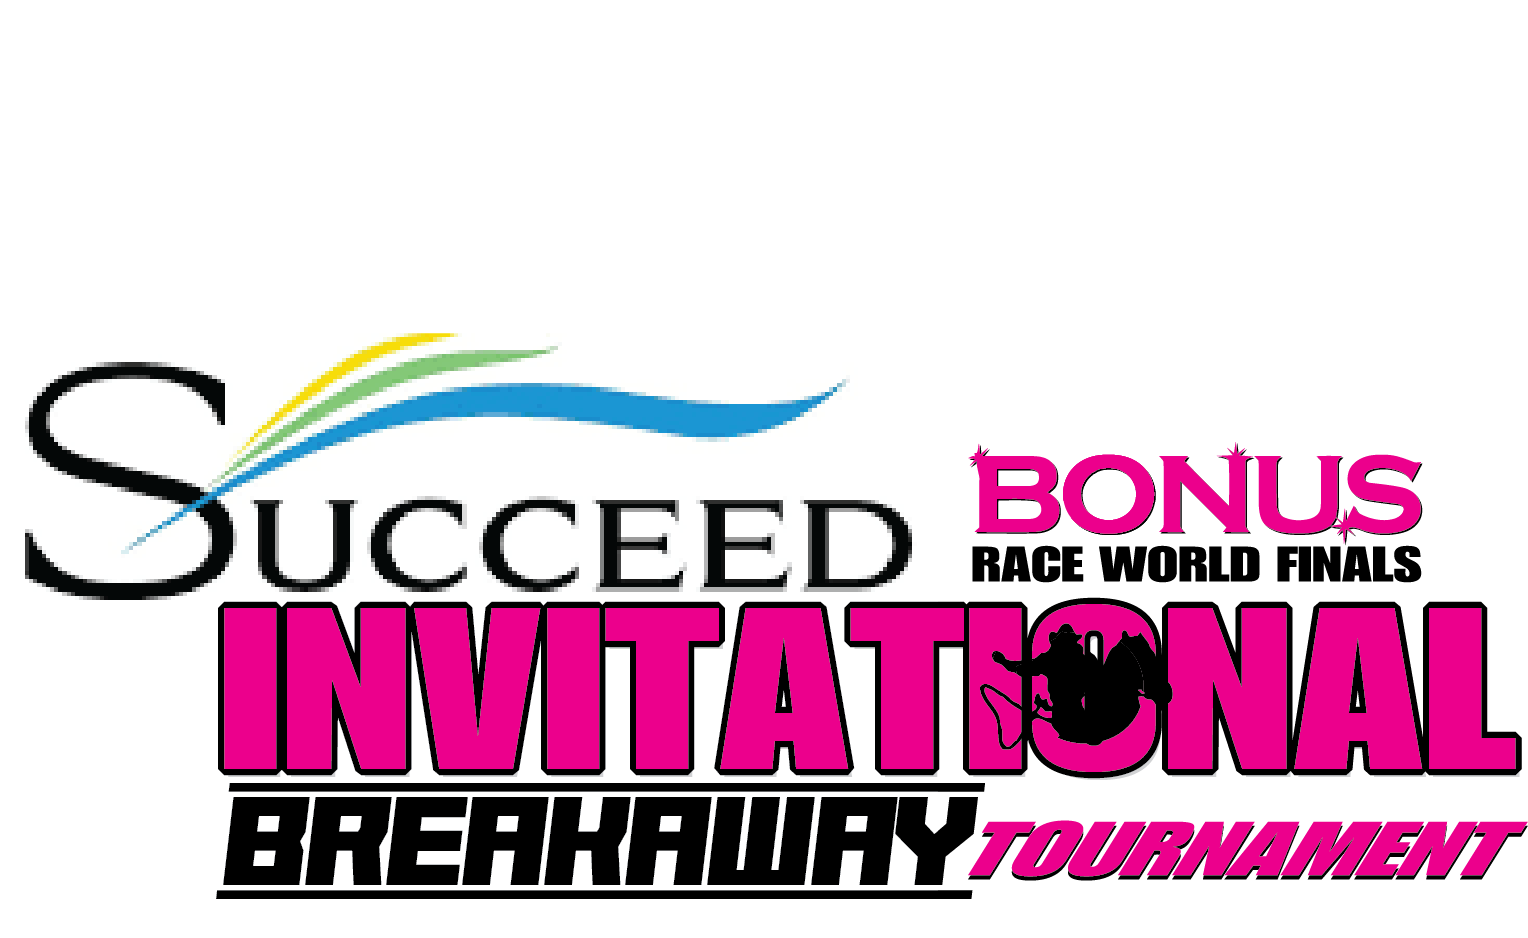 succeed invitational breakaway tournament